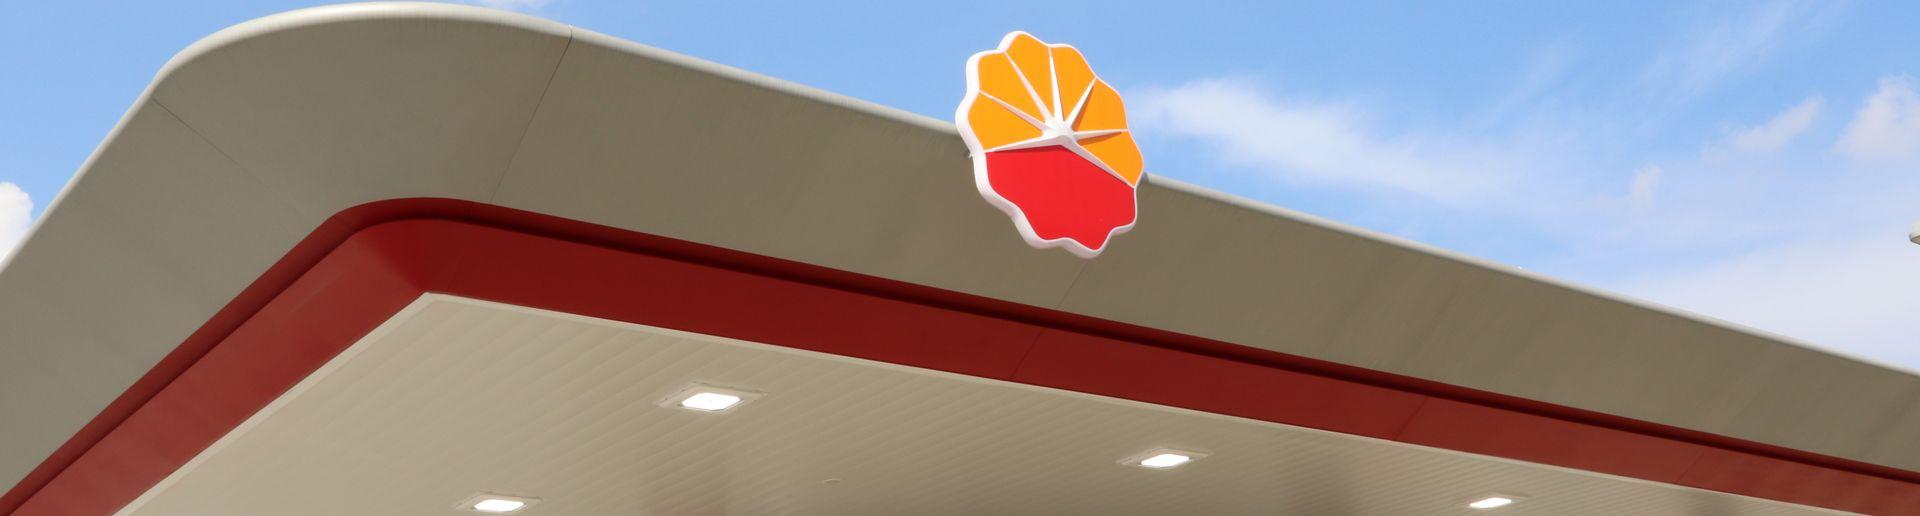 Orange and Red Banner Logo - New Station Design - SPC: Singapore Petroleum Company